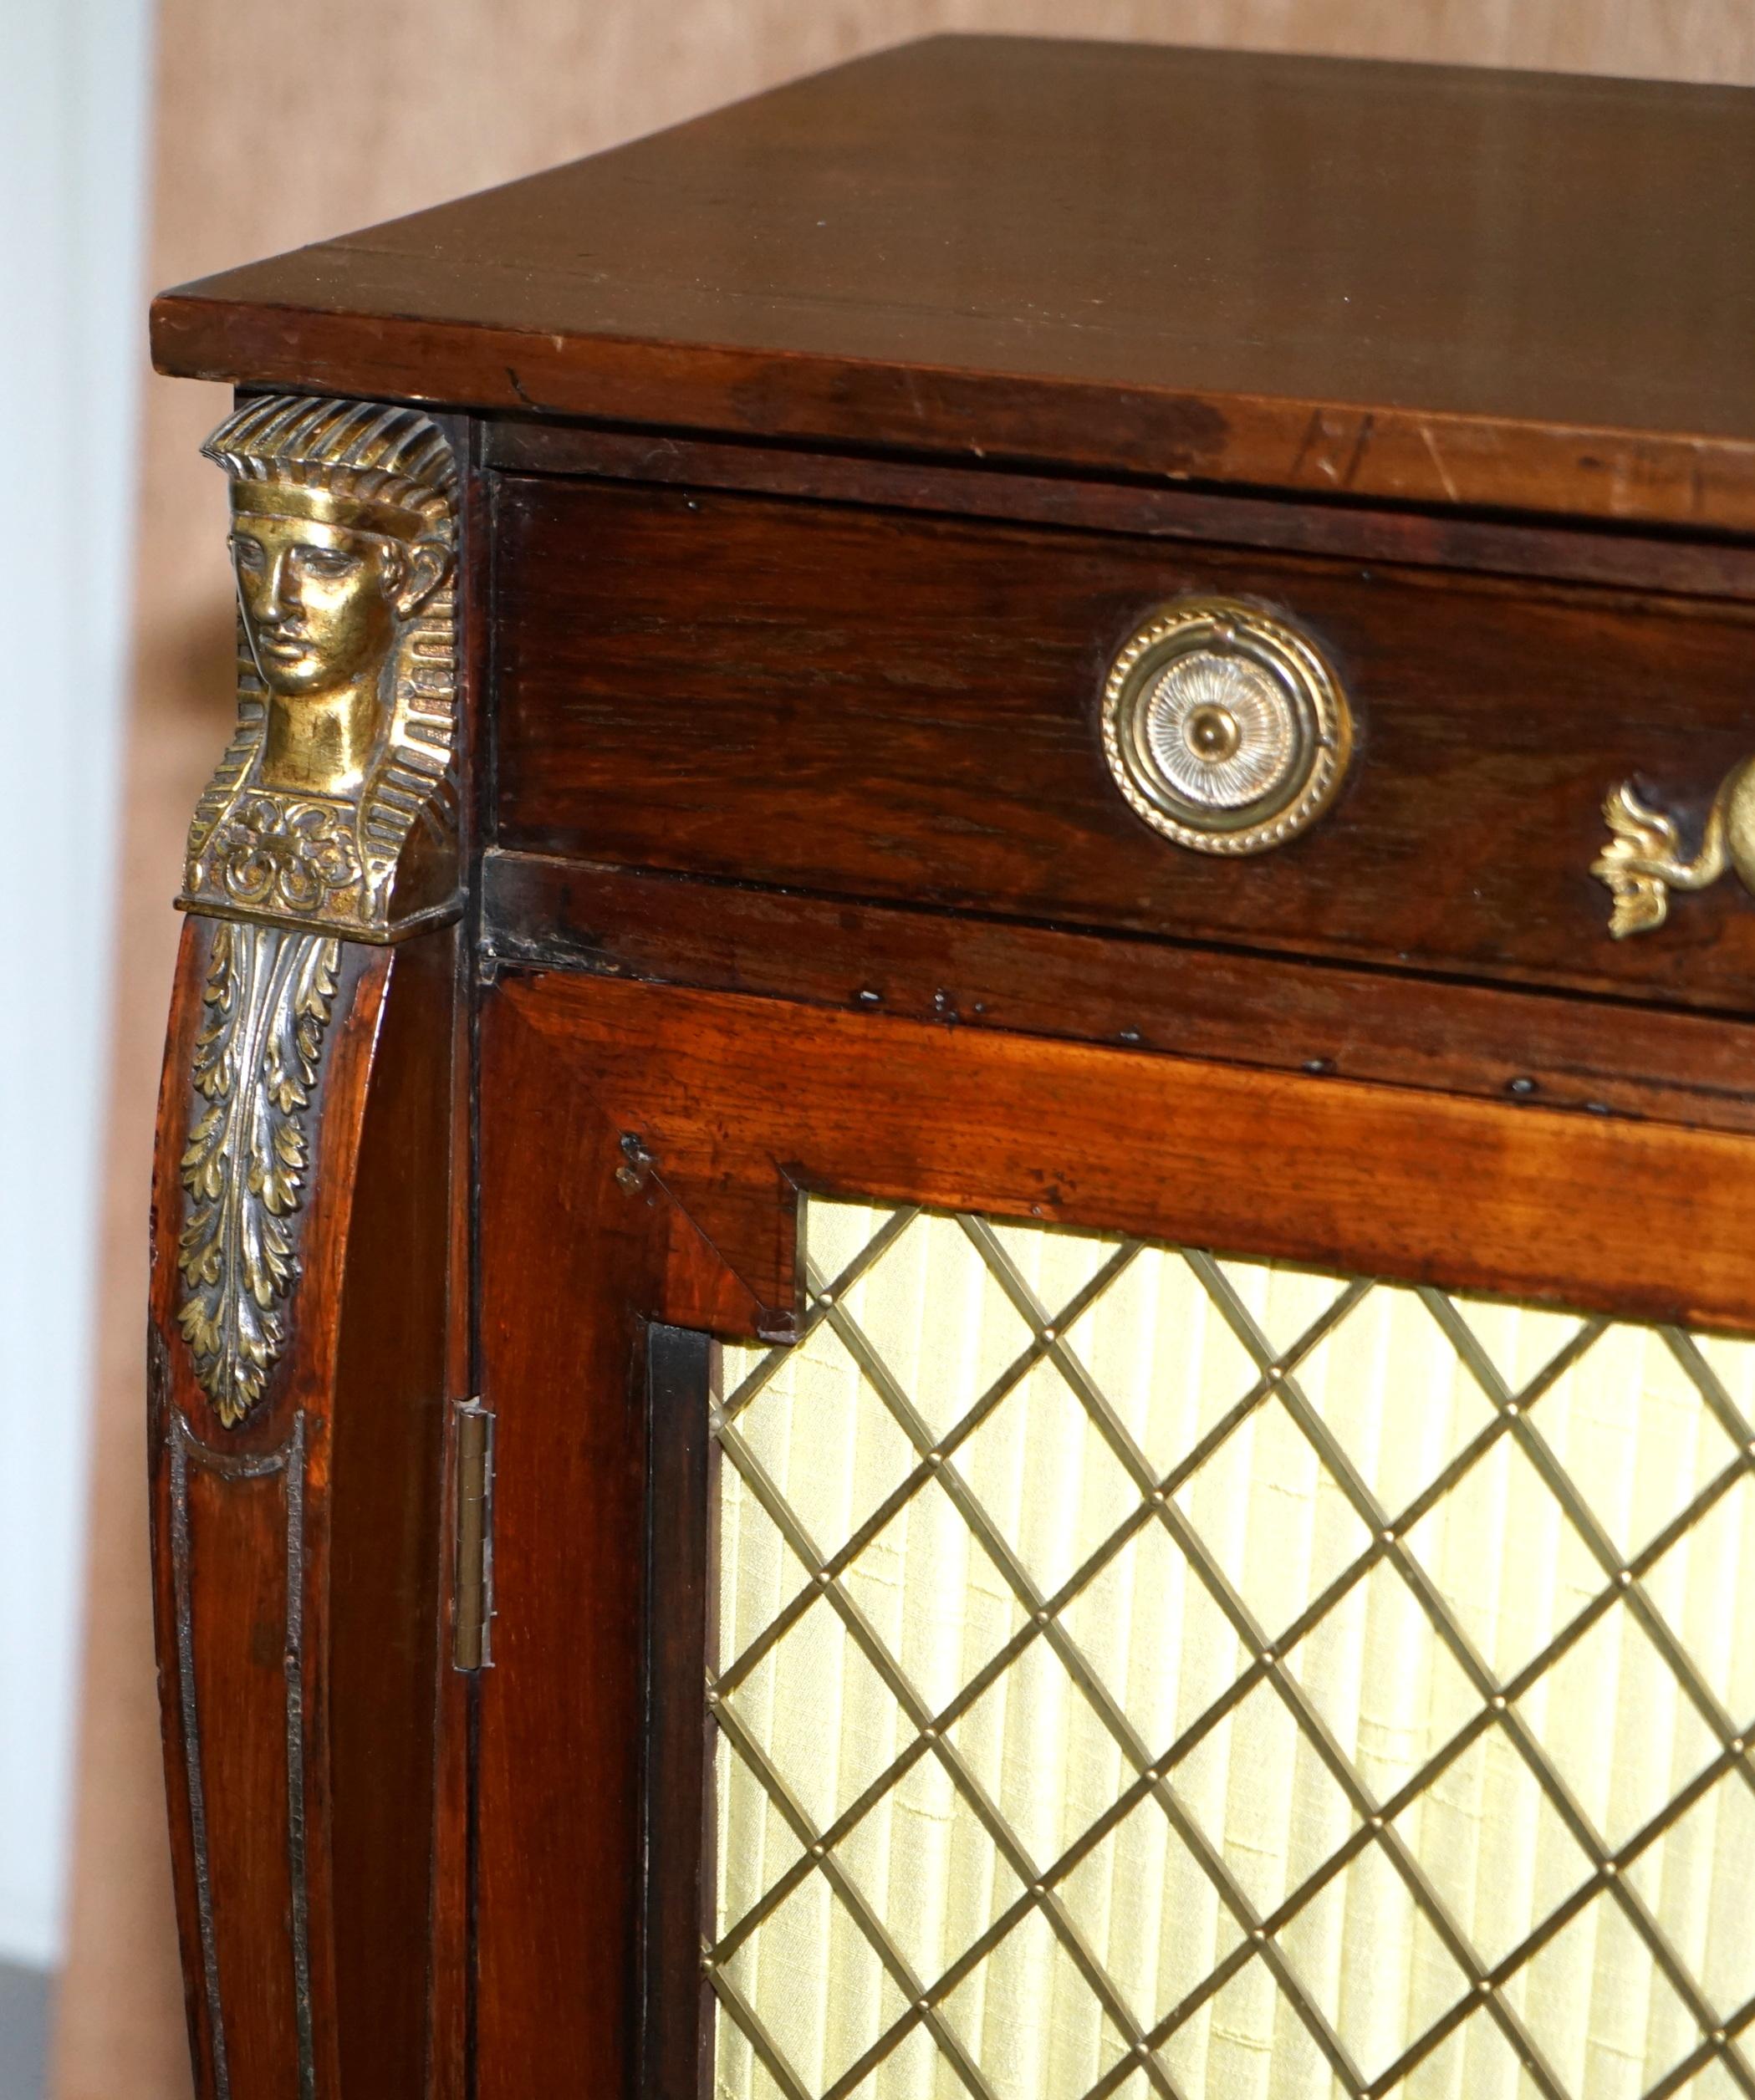 Hand-Crafted Original Regency Hardwood Egyptian Revival Ormolu-Mounted Sideboard Cupboard